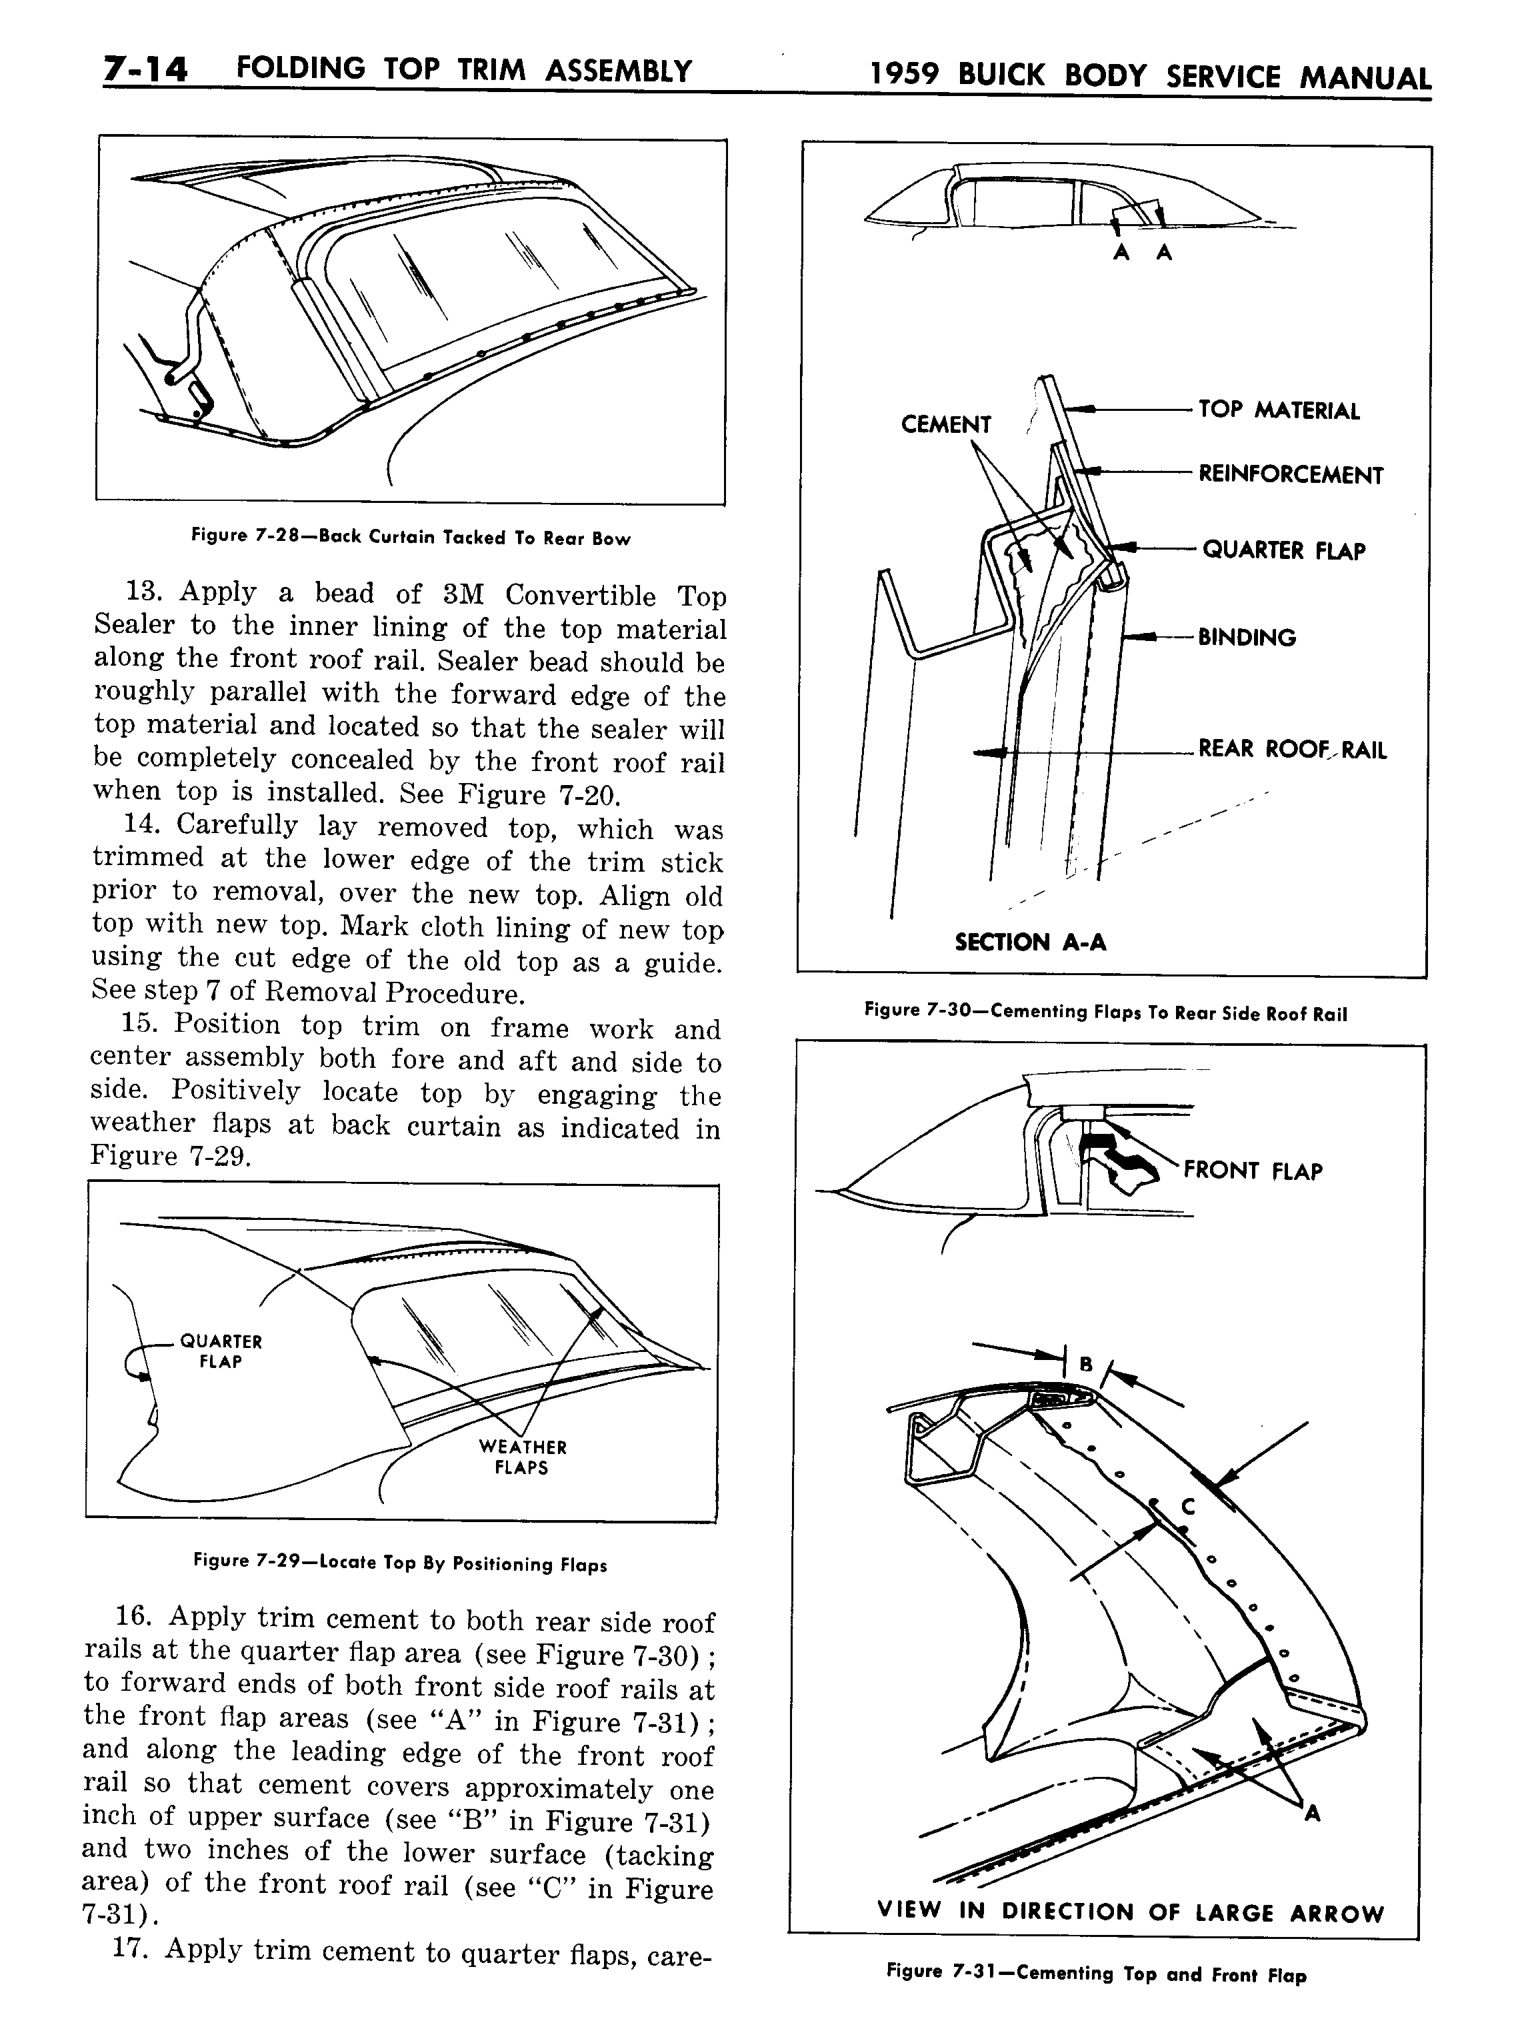 n_08 1959 Buick Body Service-Folding Top_14.jpg